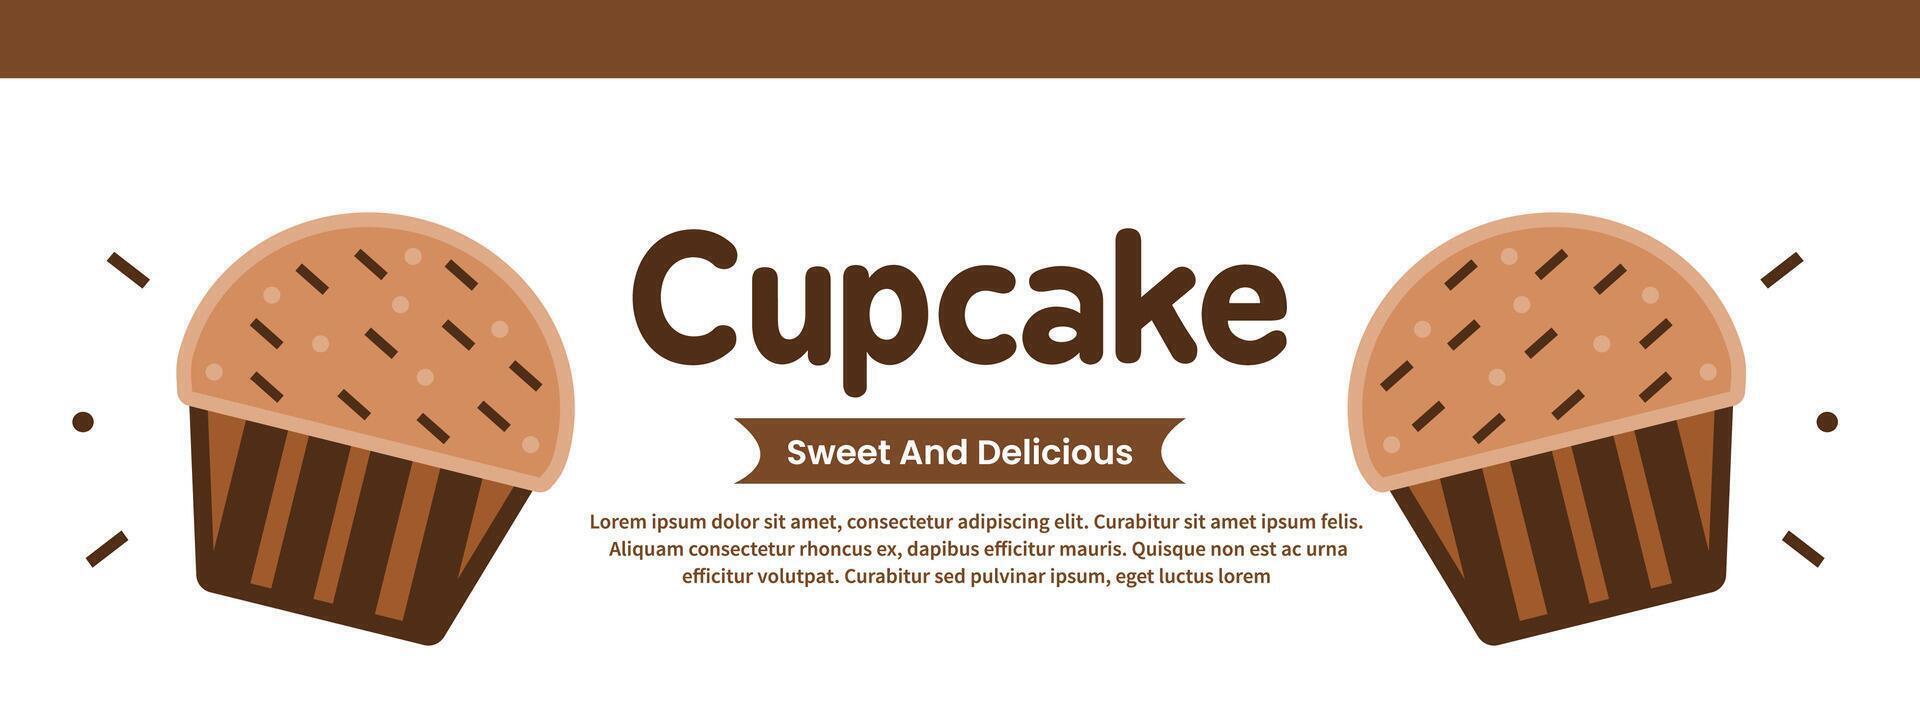 cute cartoon style cupcake illustration banner vector